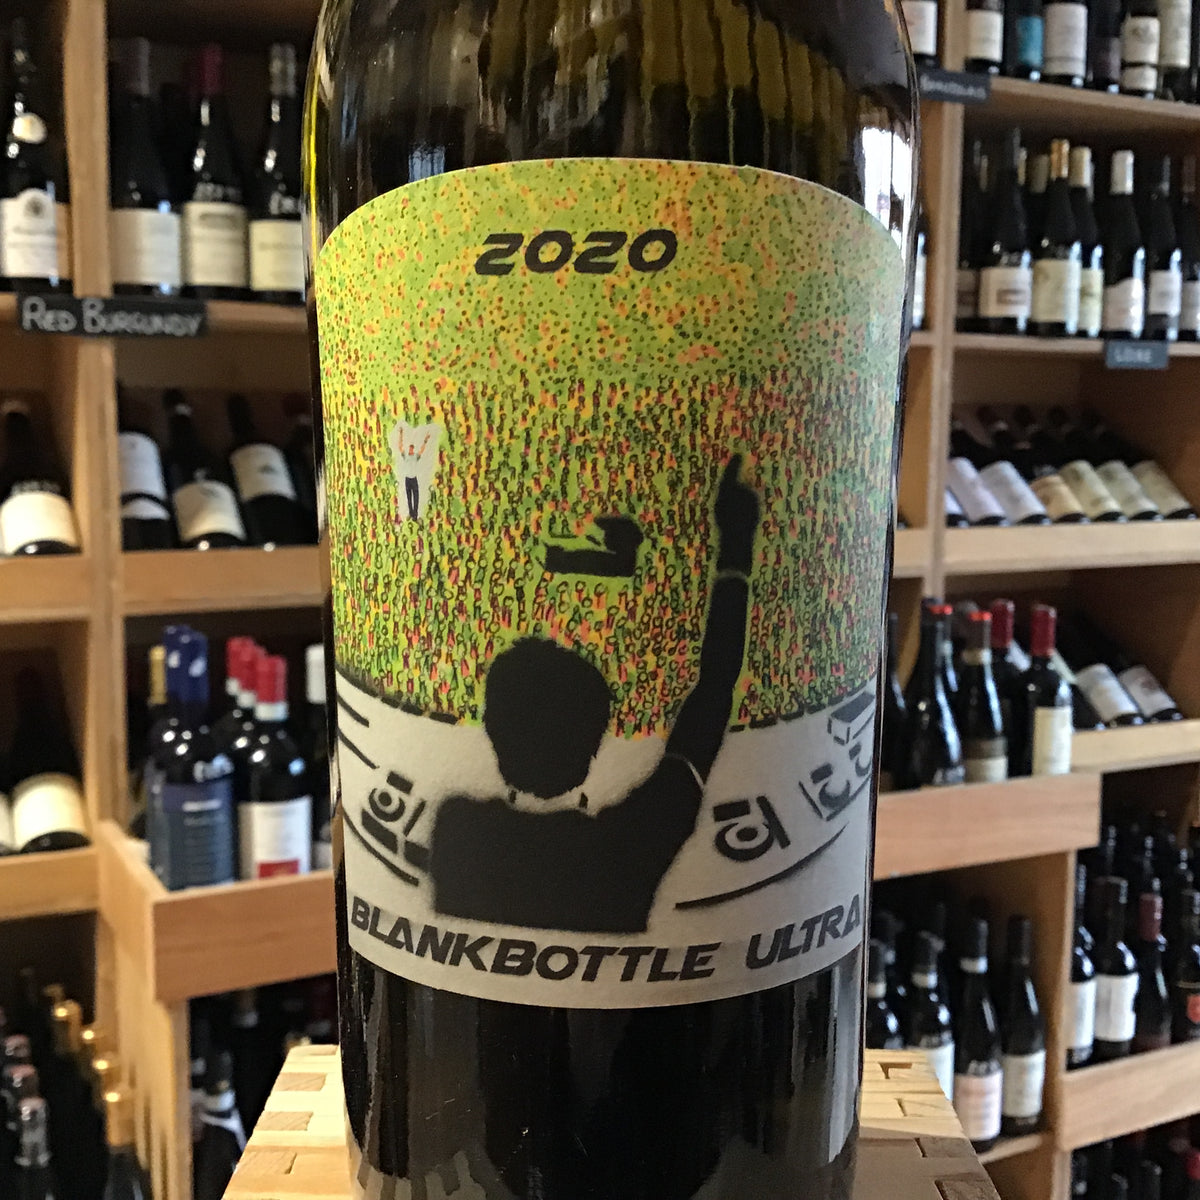 Blank Bottle, Ultra, Swartland 2020 - Butlers Wine Cellar Brighton